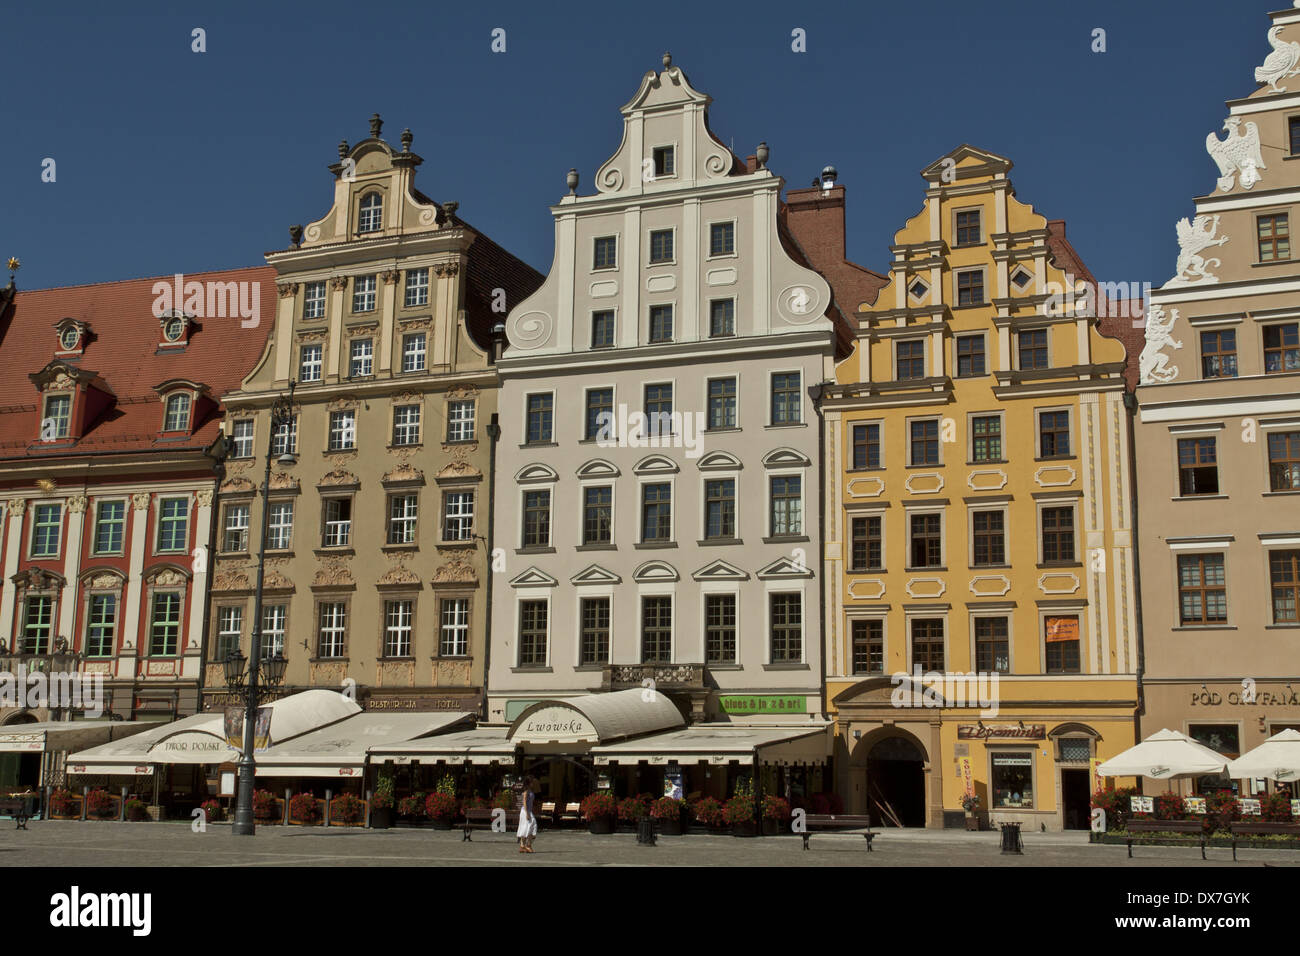 Buildings at Market Square with restaurants 'Dwor Polski' and 'Karczma Lwowska' Stock Photo